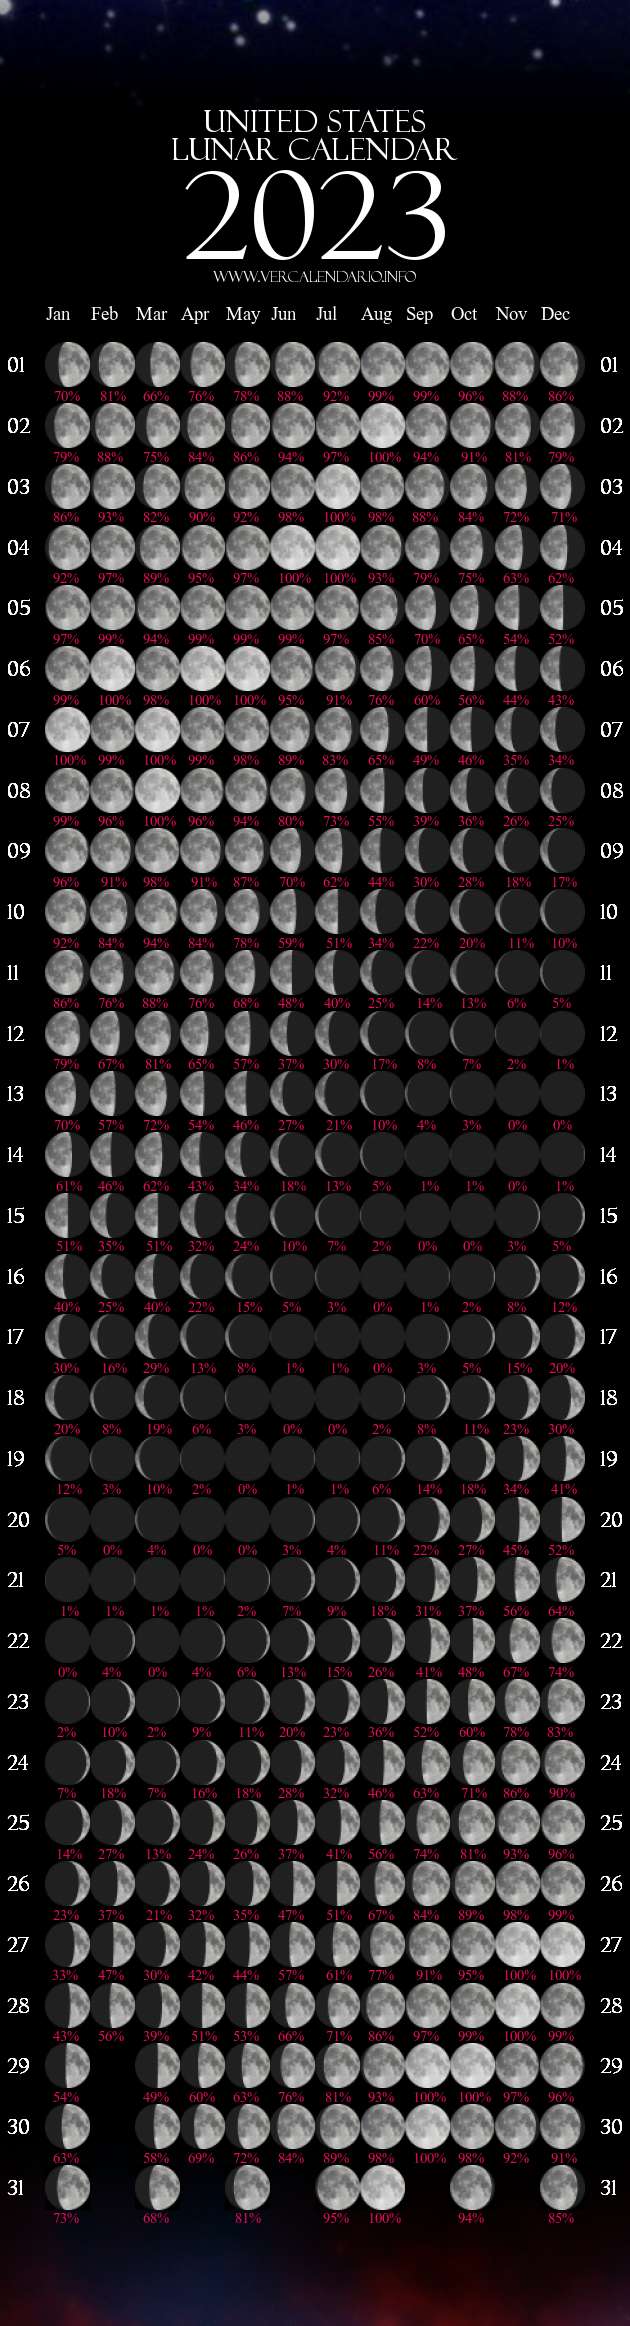 Lunar Calendar 2023 (United States)